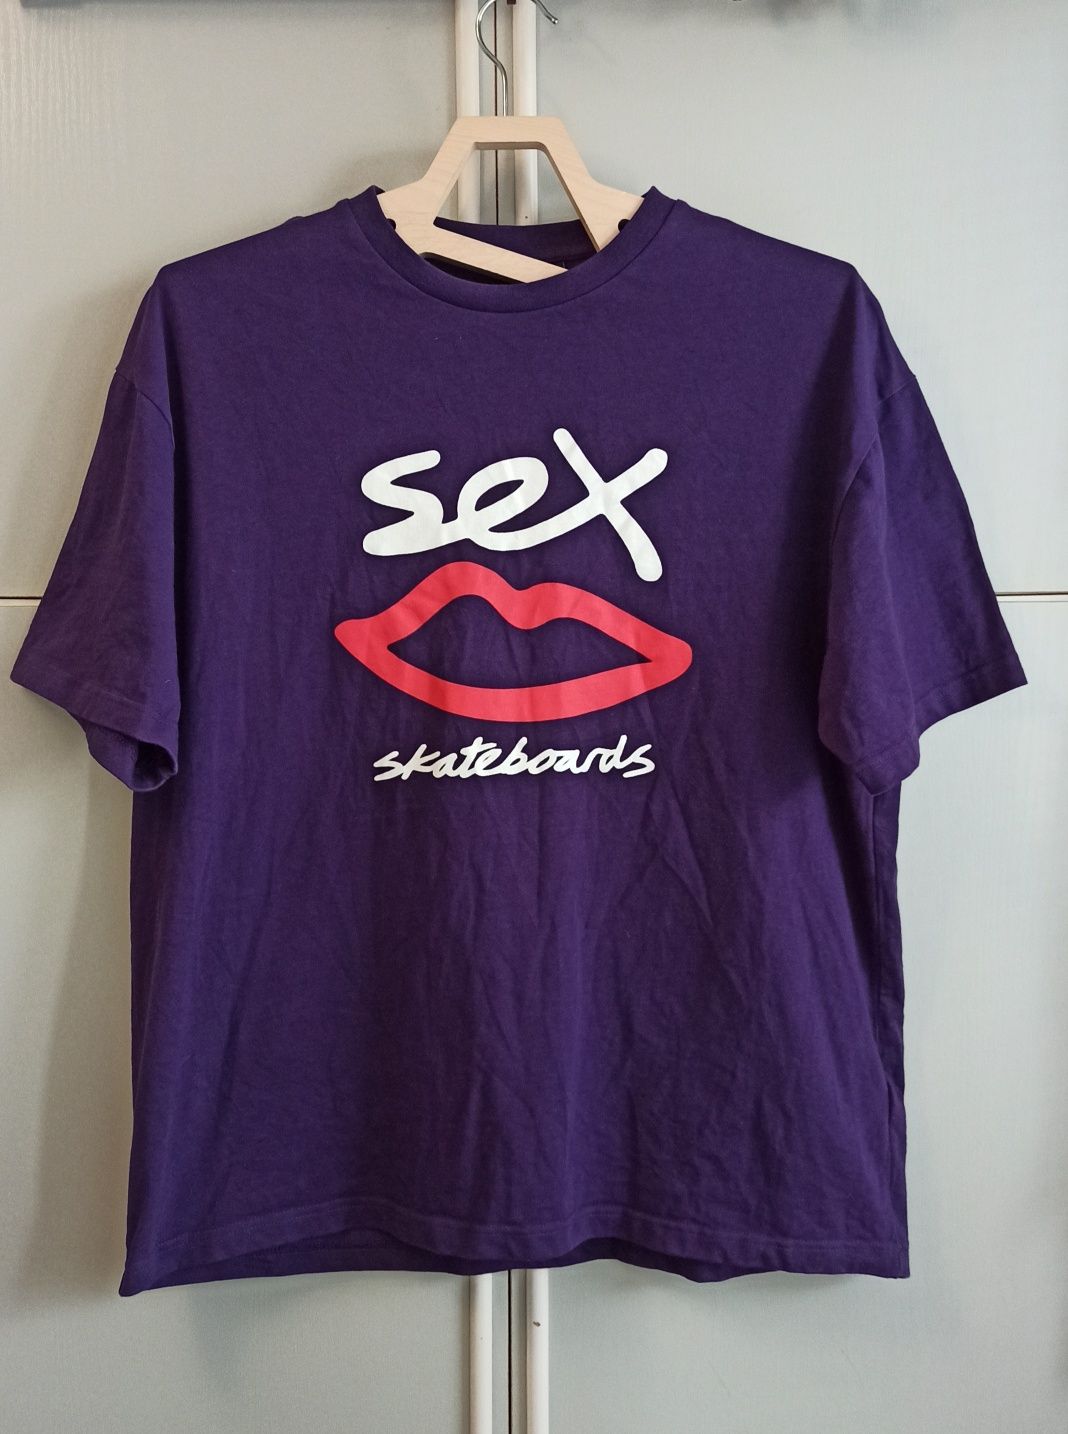 Sex Skateboards t-shirt / Carhartt Nigel риза / Nike тениска